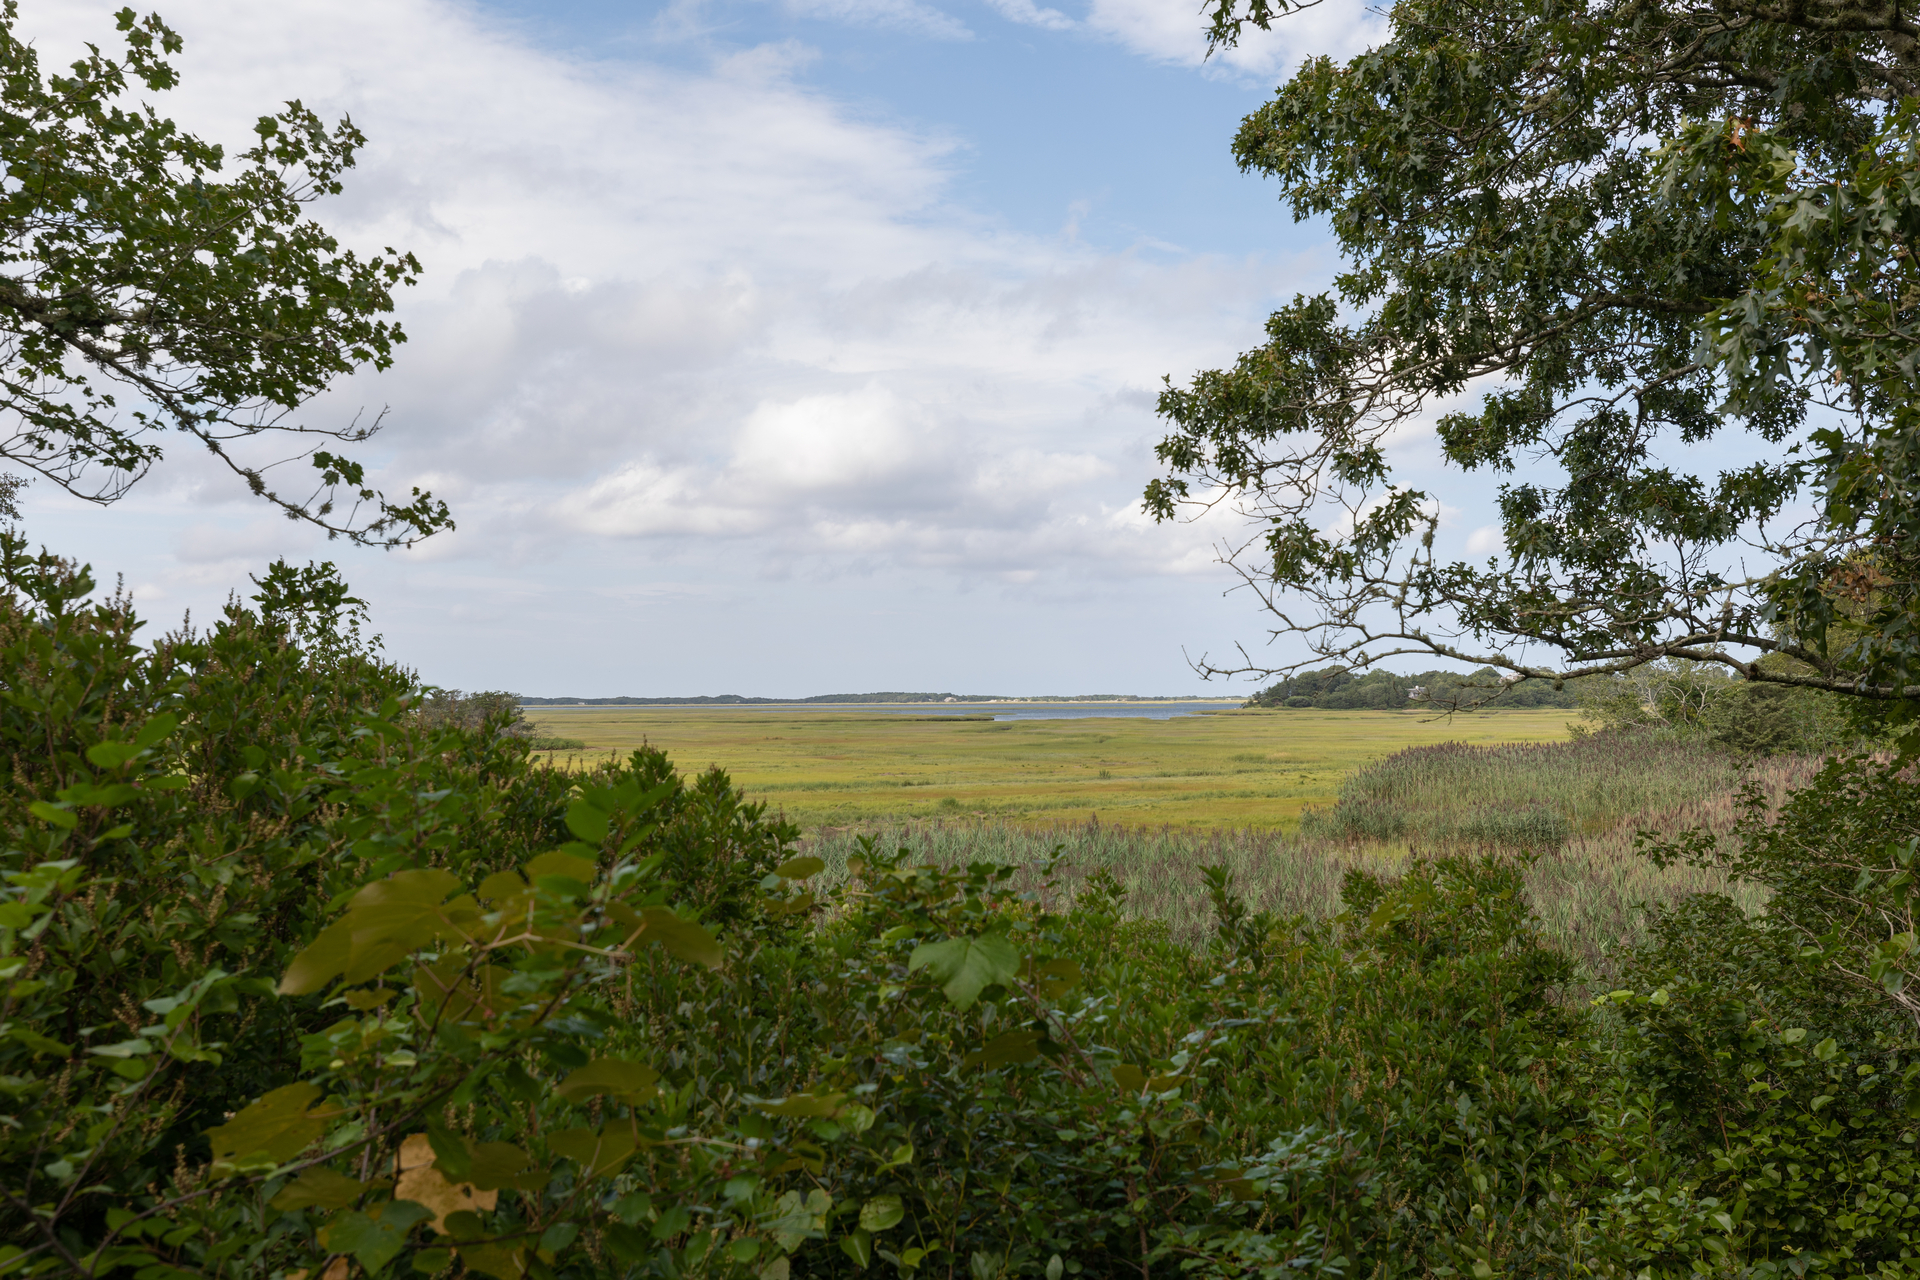 Marsh view through shaded trees